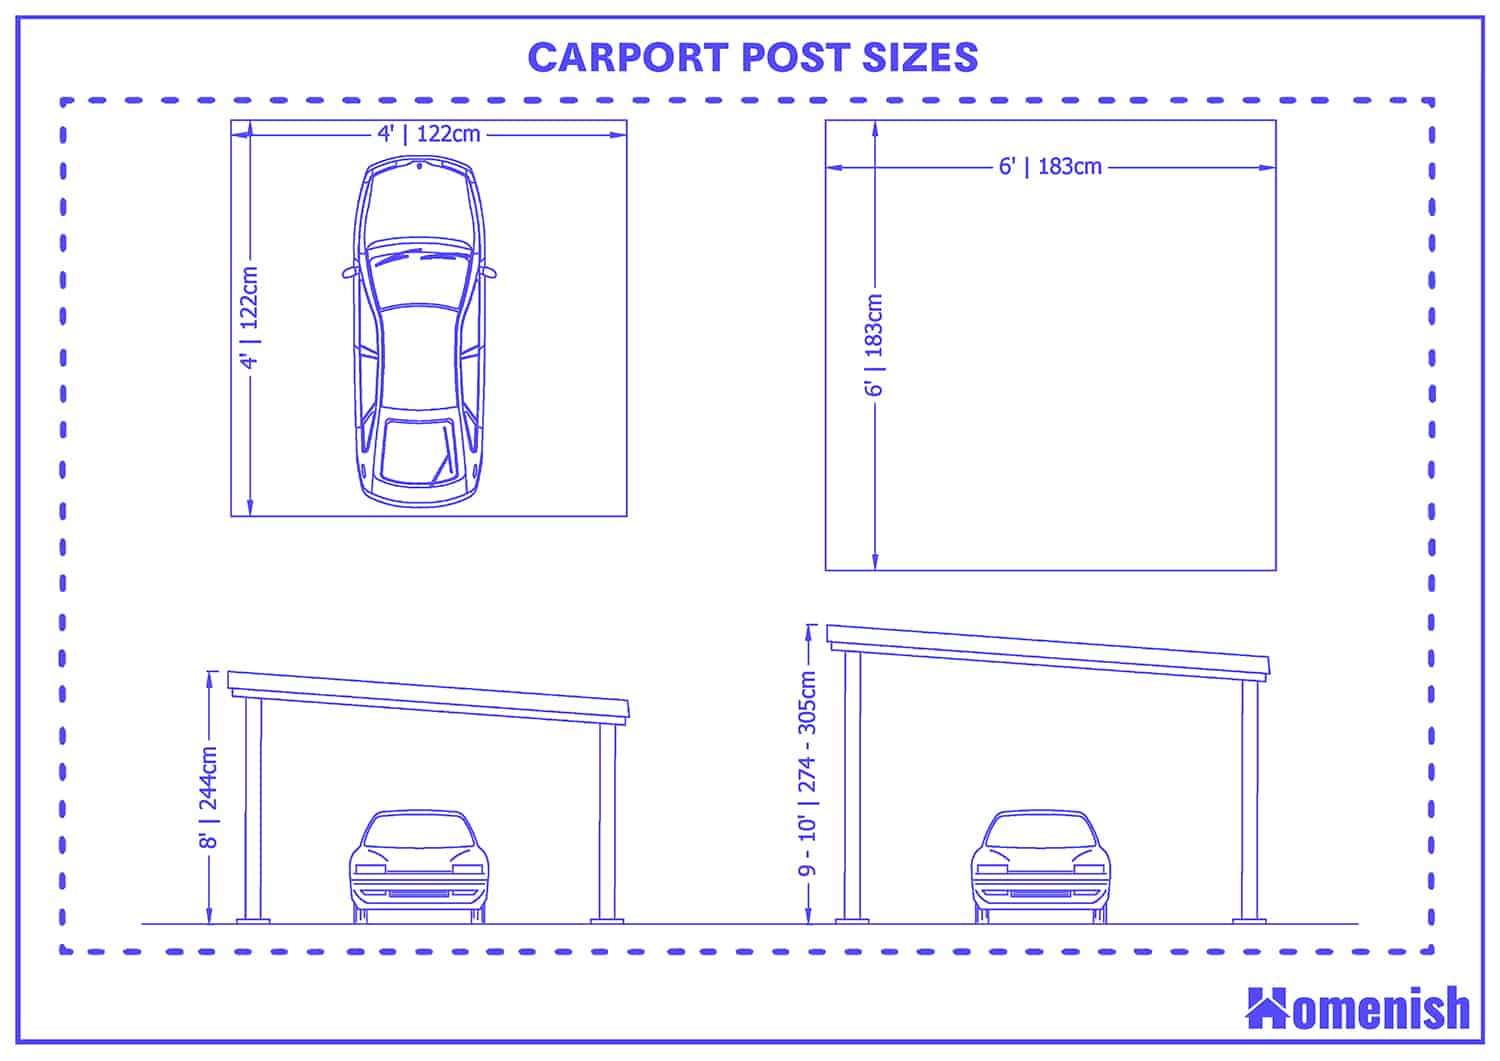 Carport Post Sizes